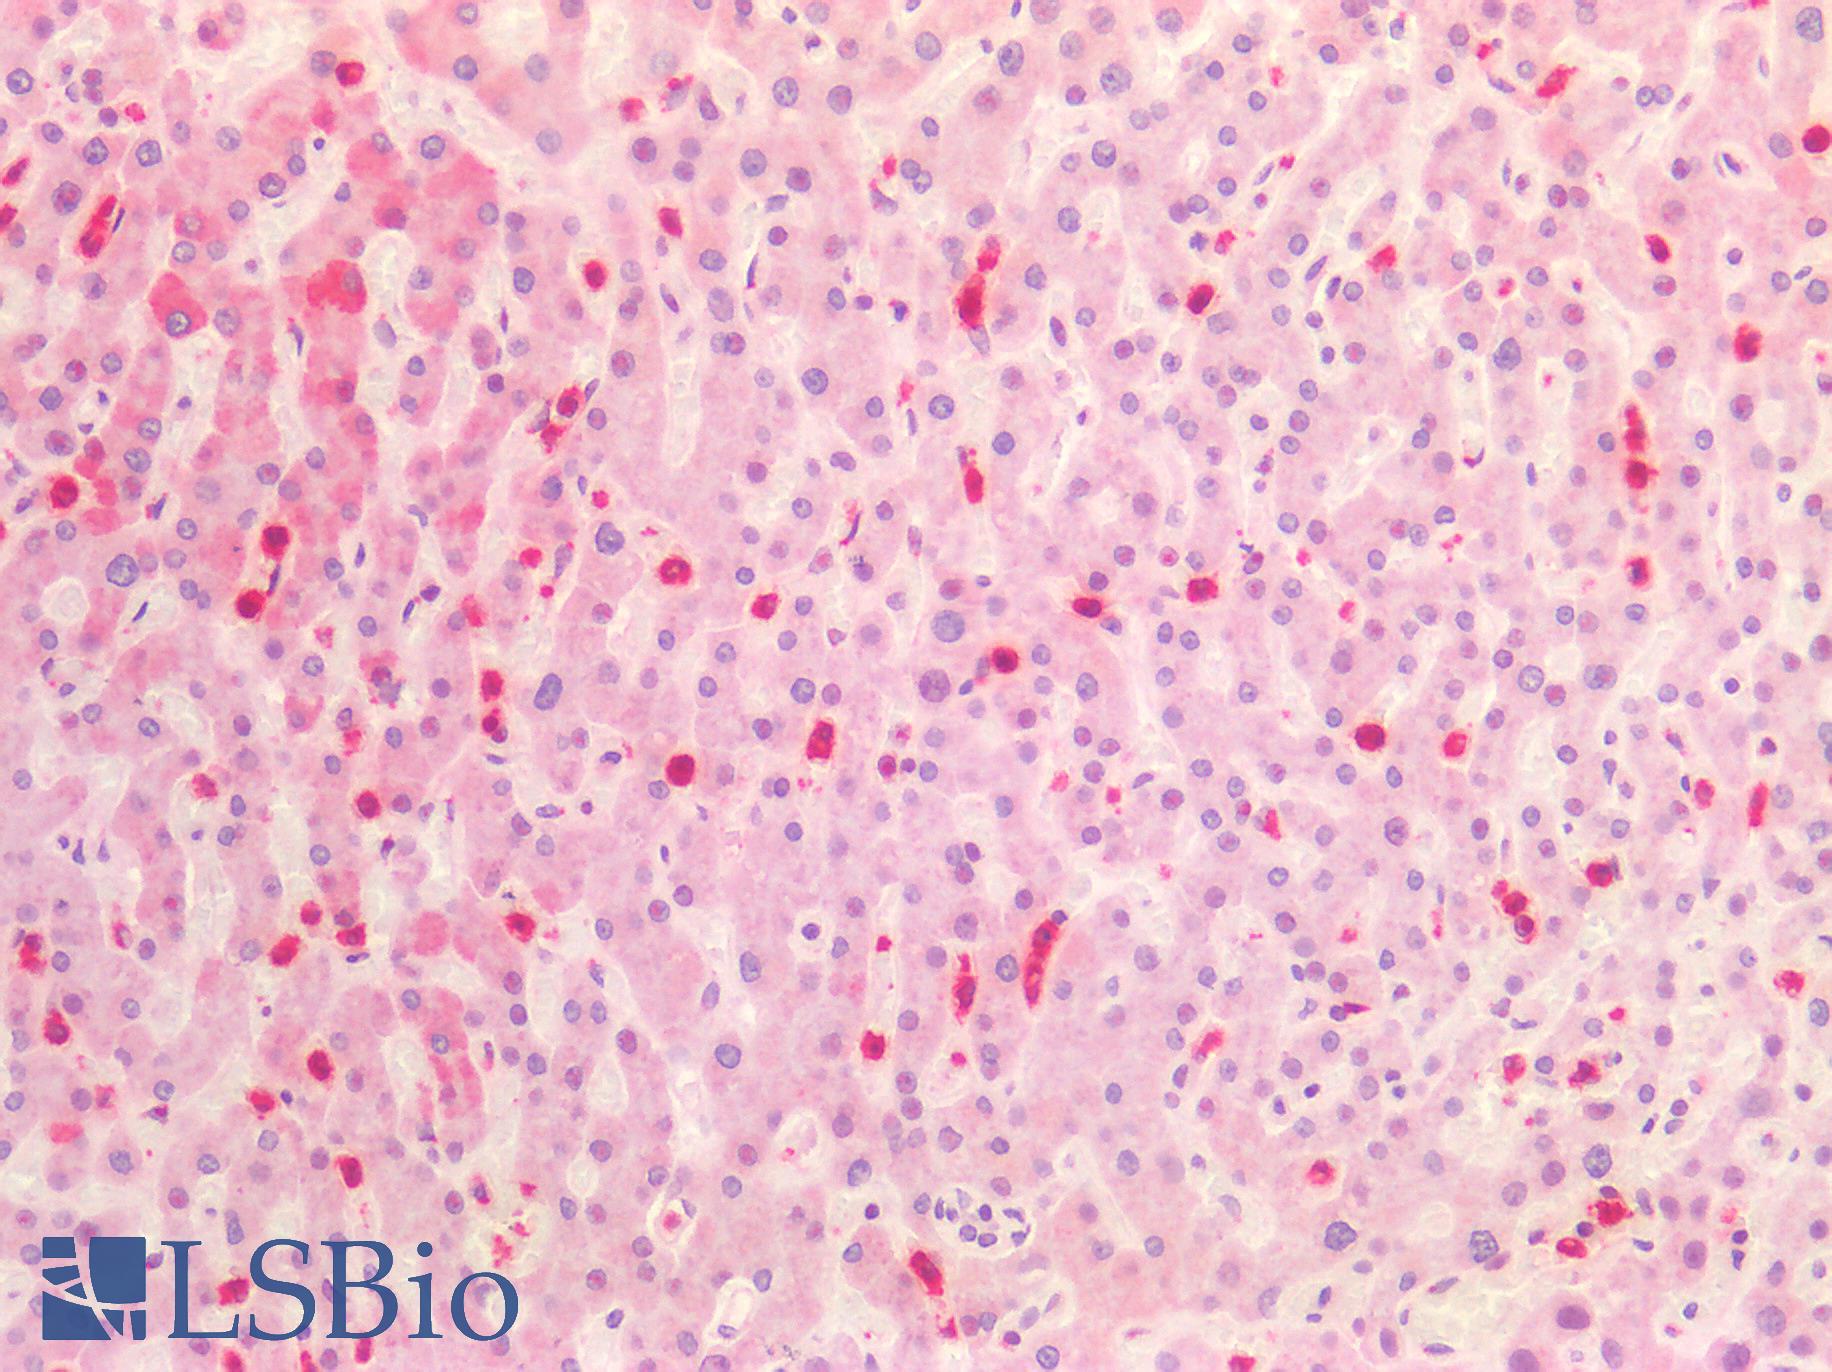 HNE / Neutrophil Elastase Antibody - Human Liver: Formalin-Fixed, Paraffin-Embedded (FFPE)